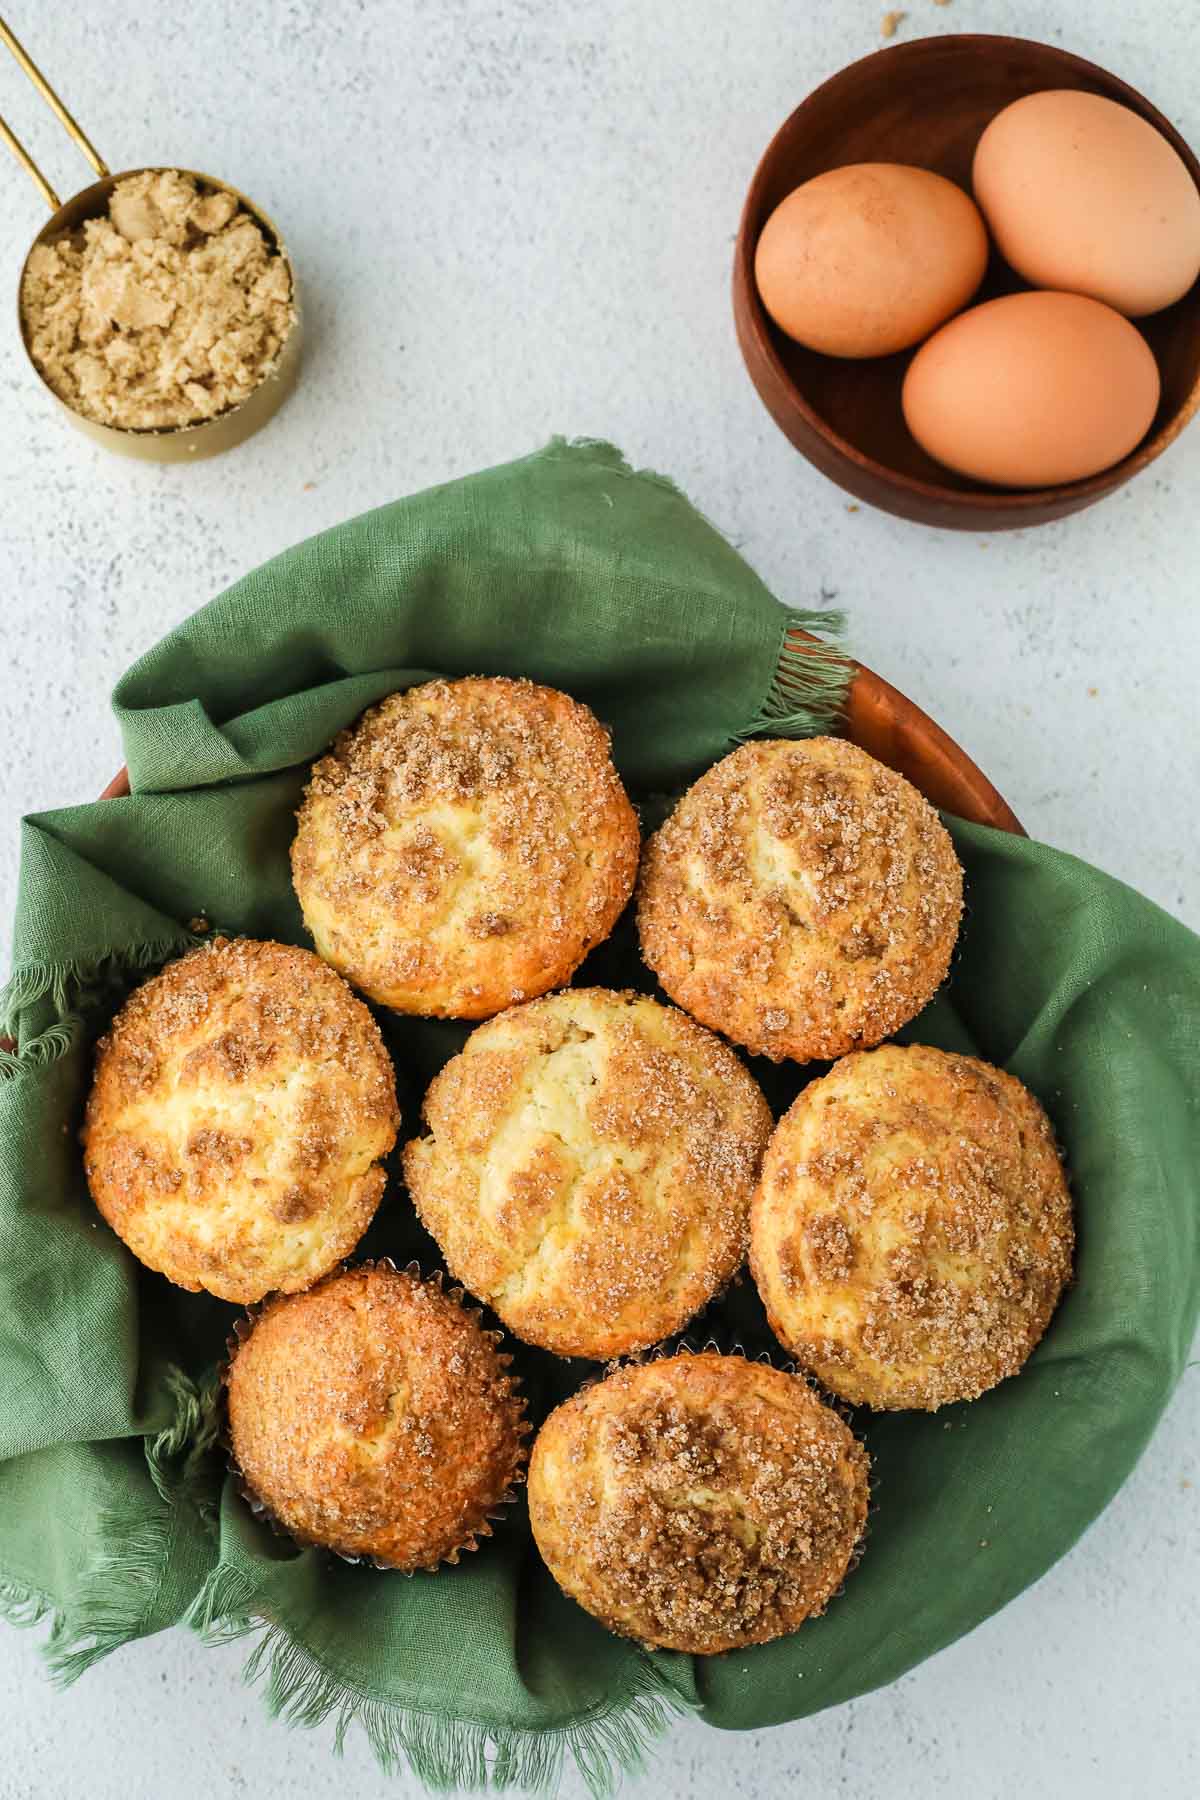 Cinnamon Streusel Muffins